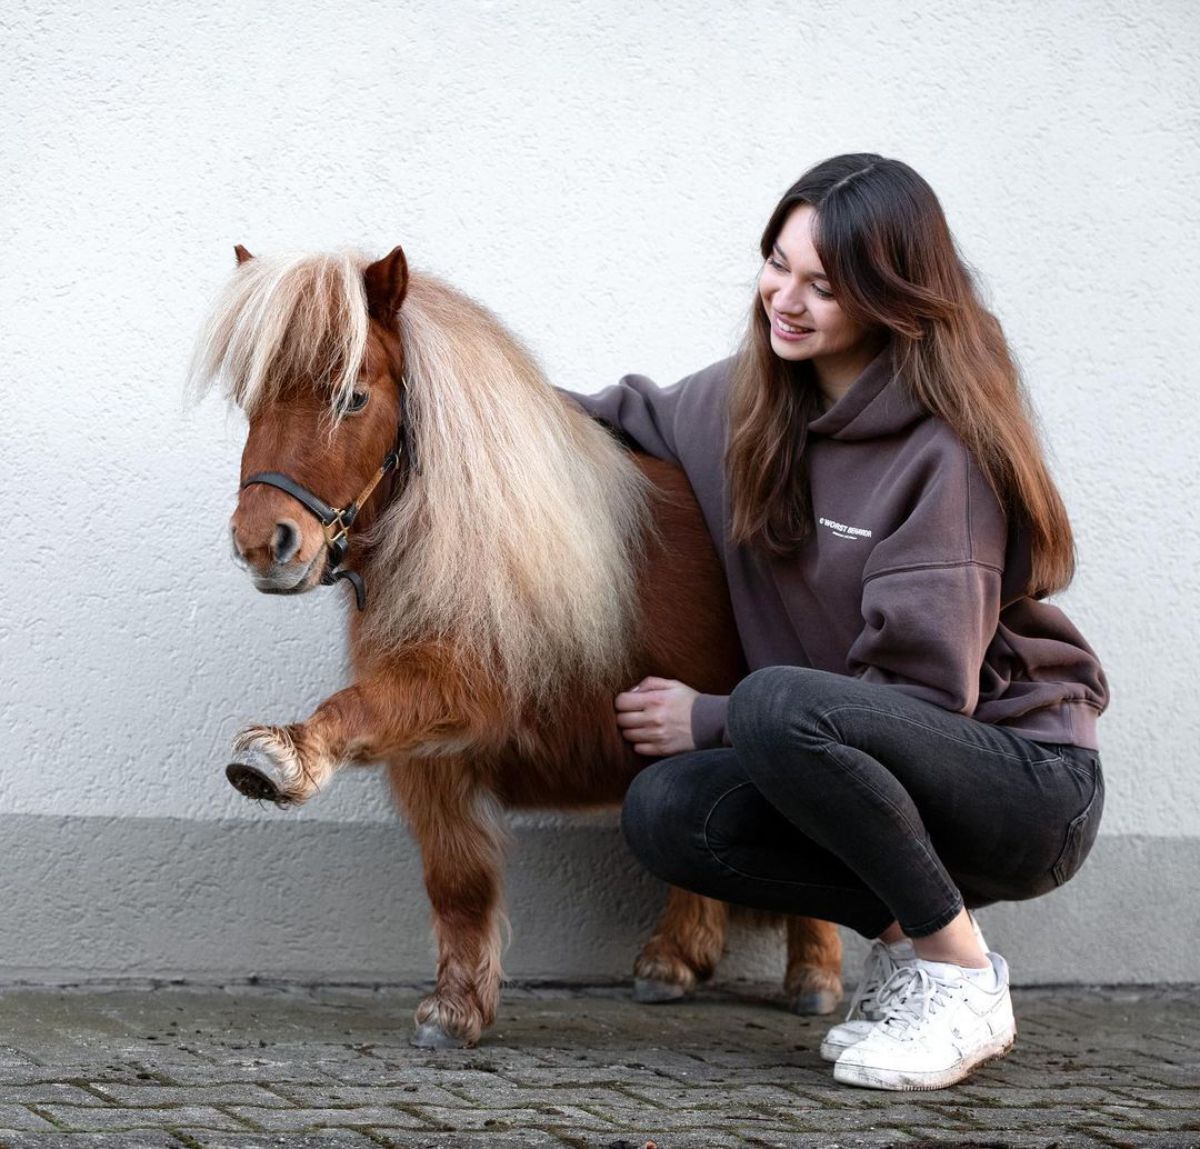 A smiling woman kneels near an adorable Shetland Pony.